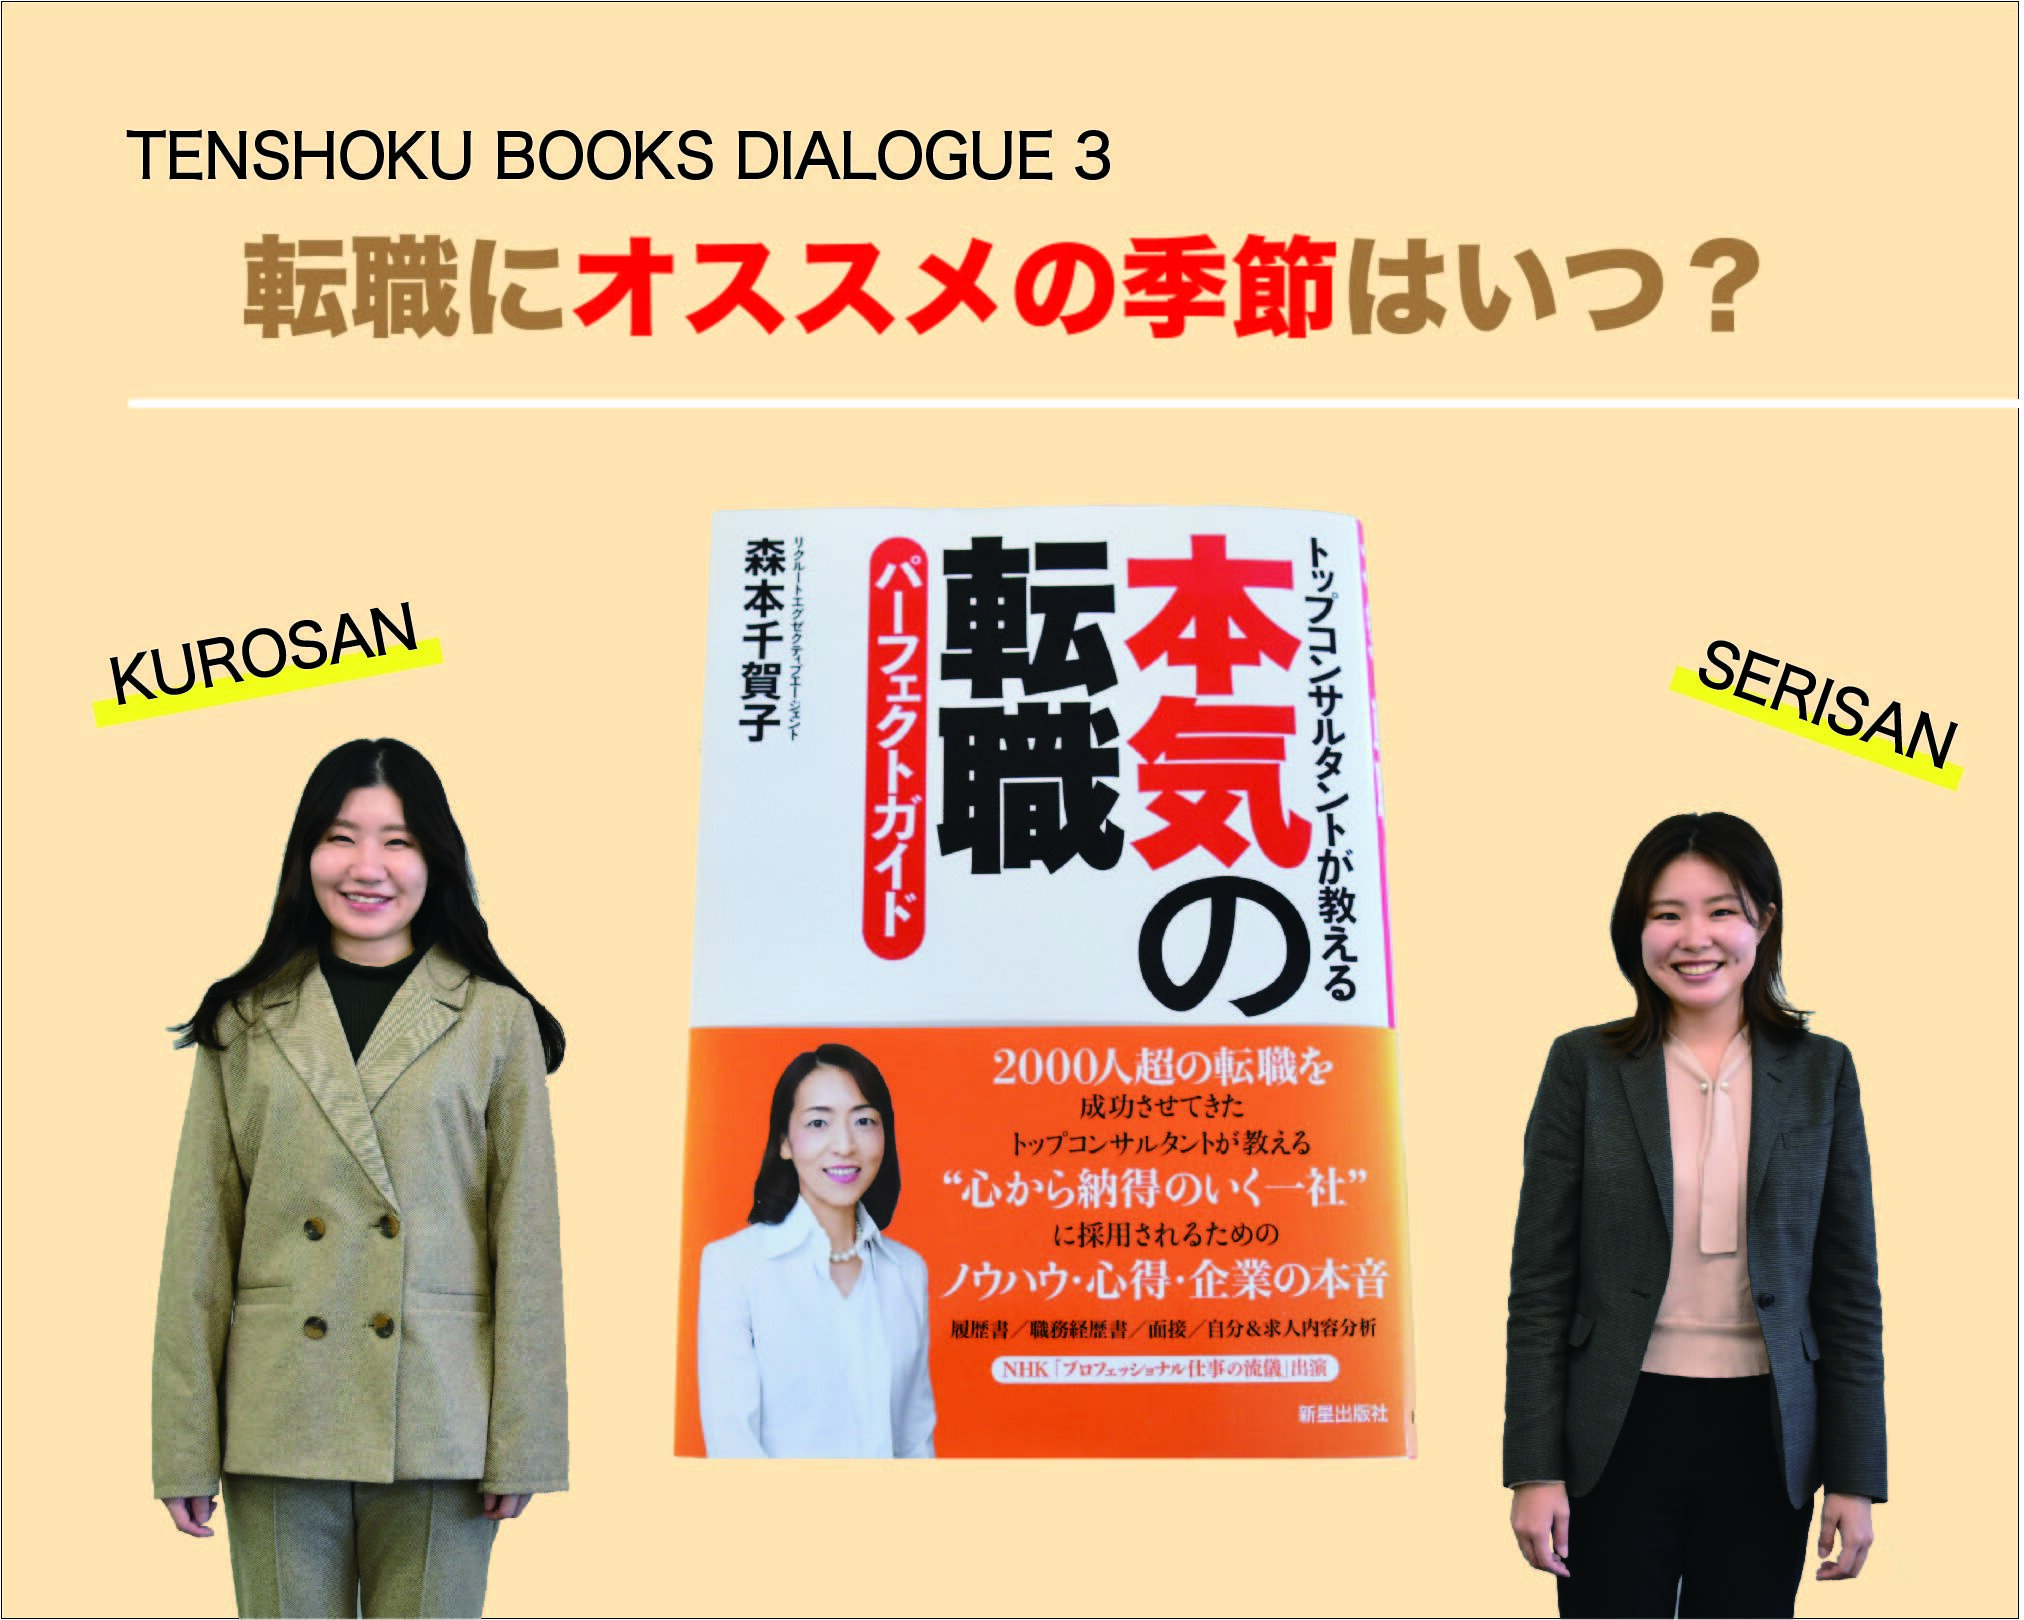 【TENSHOKU BOOKS DIALOGUE3】『本気の転職パーフェクトガイド』から考える、季節による求人市場の動向の違いと転職活動。